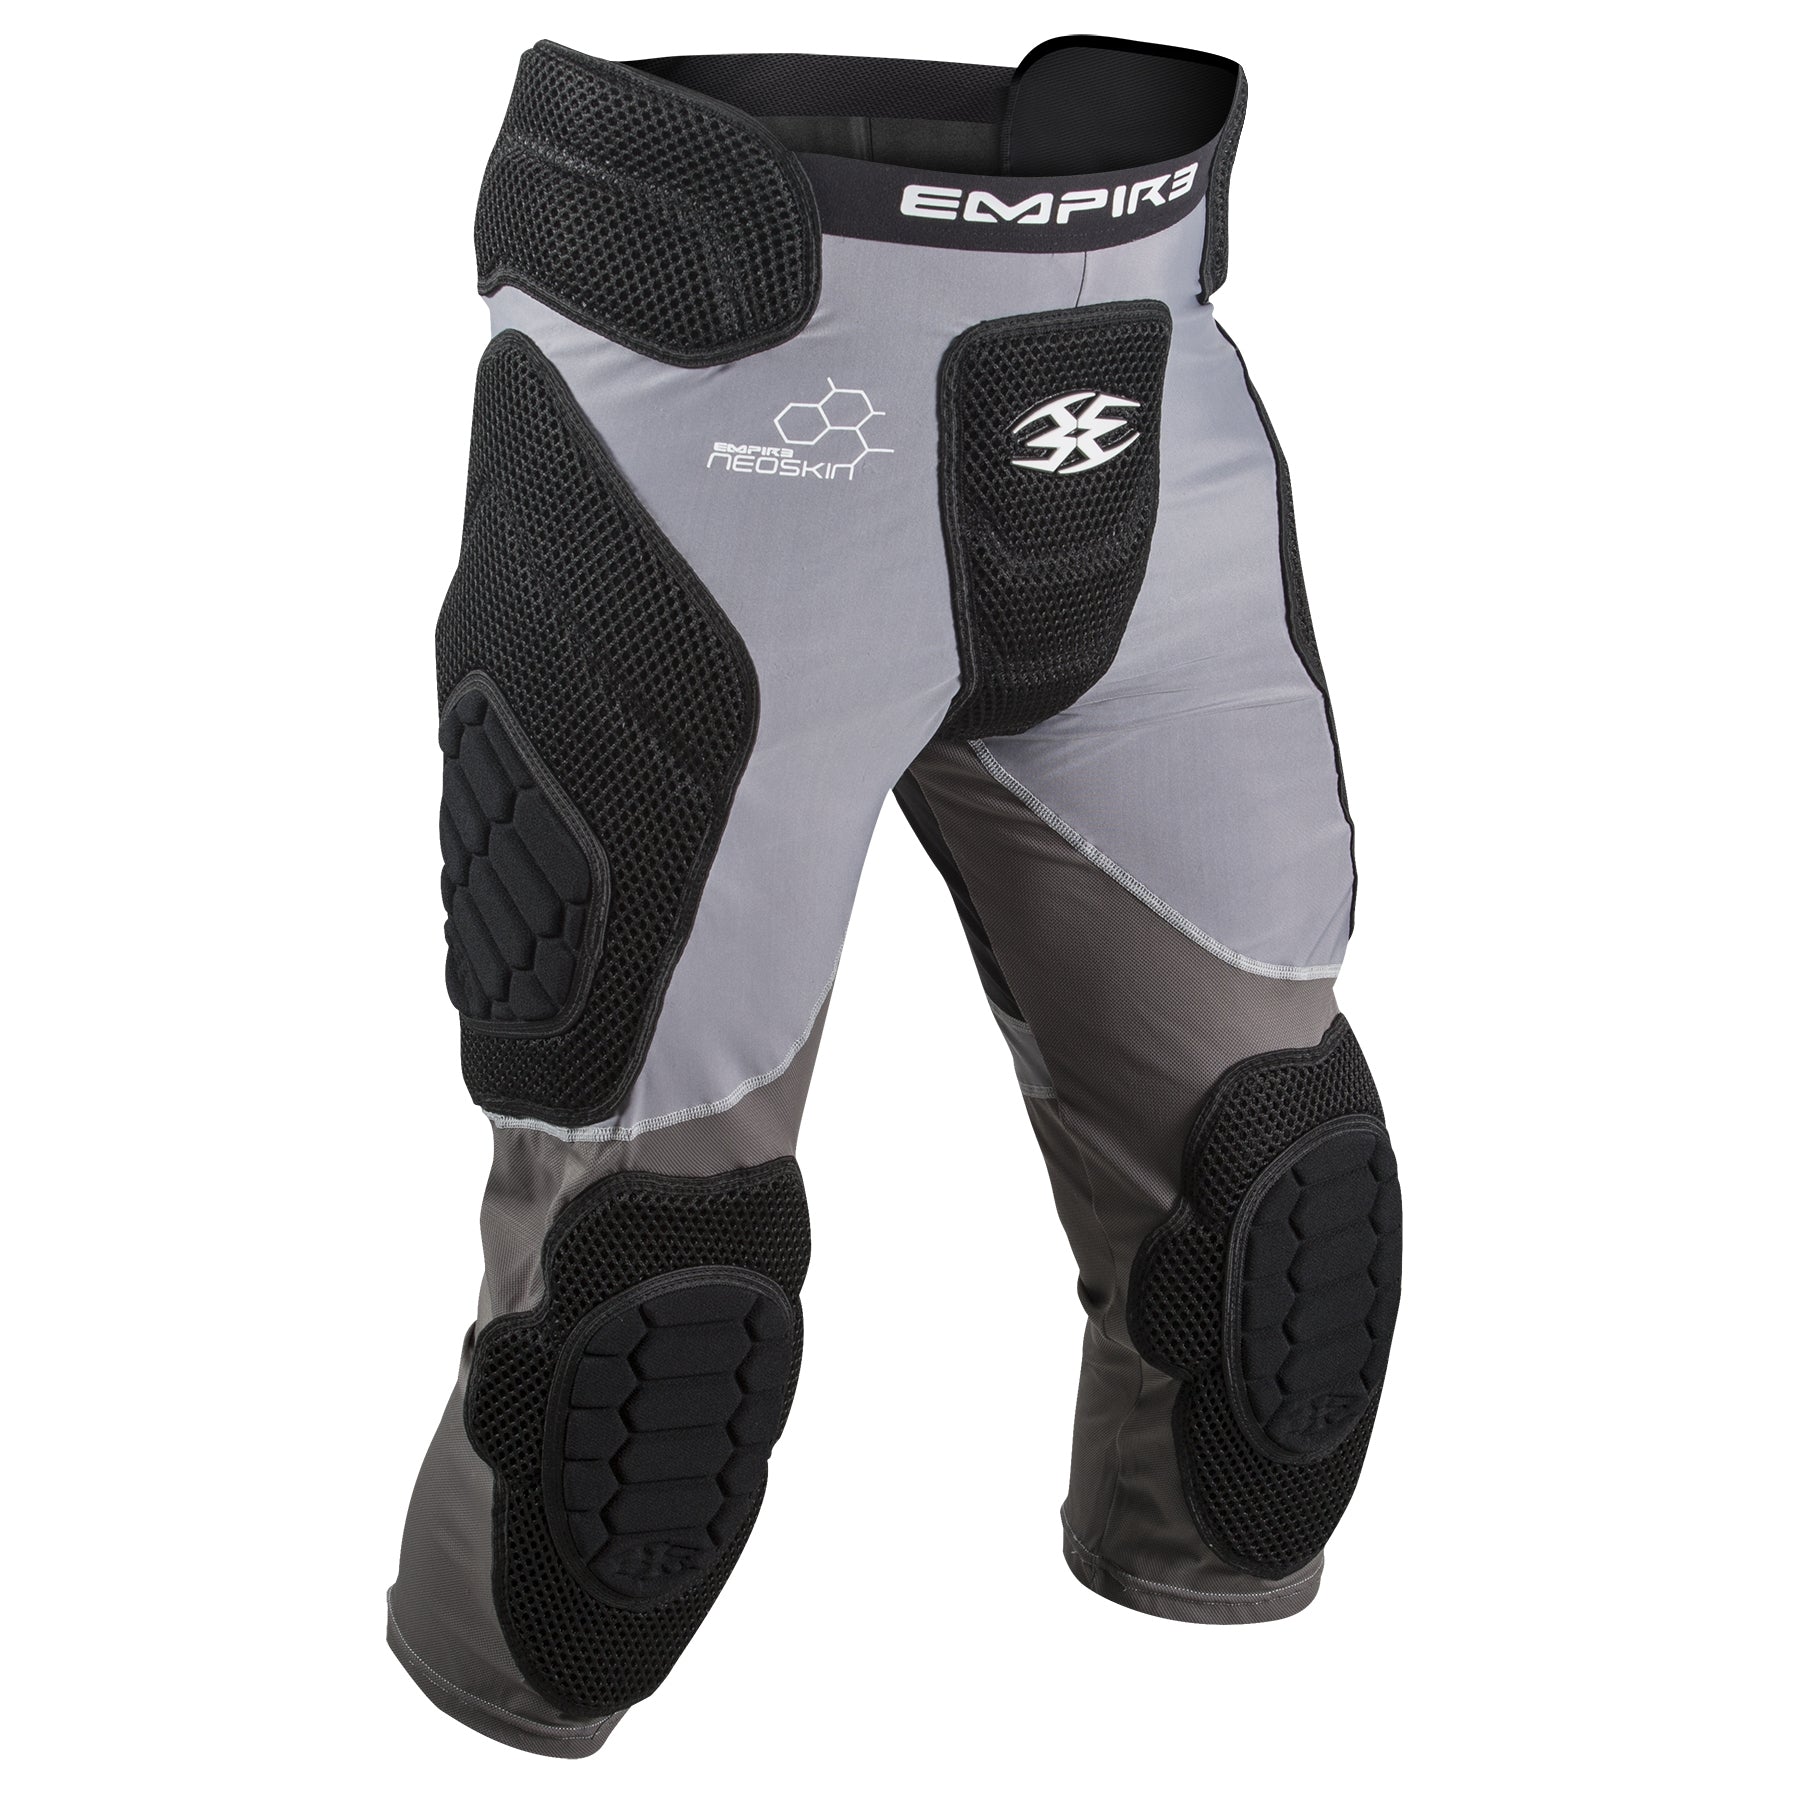 Empire NeoSkin Slide Shorts W/ Knee Pads